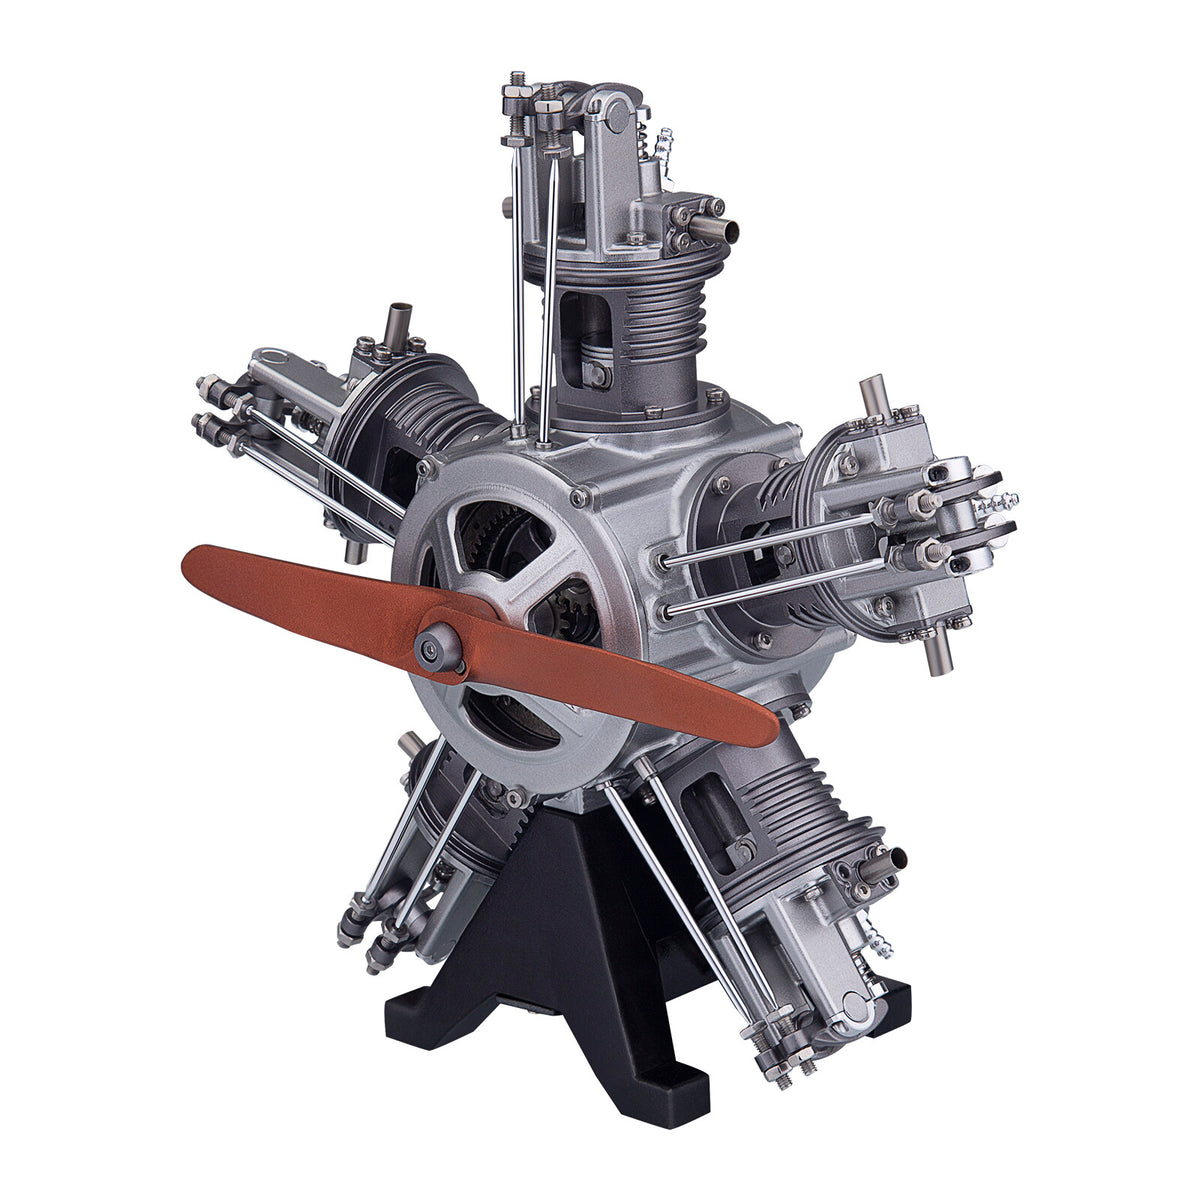 TECHING 5-Cylinder Radial Engine Model Kit - Build Your Own Engine that Works - 230+pcs enginediyshop